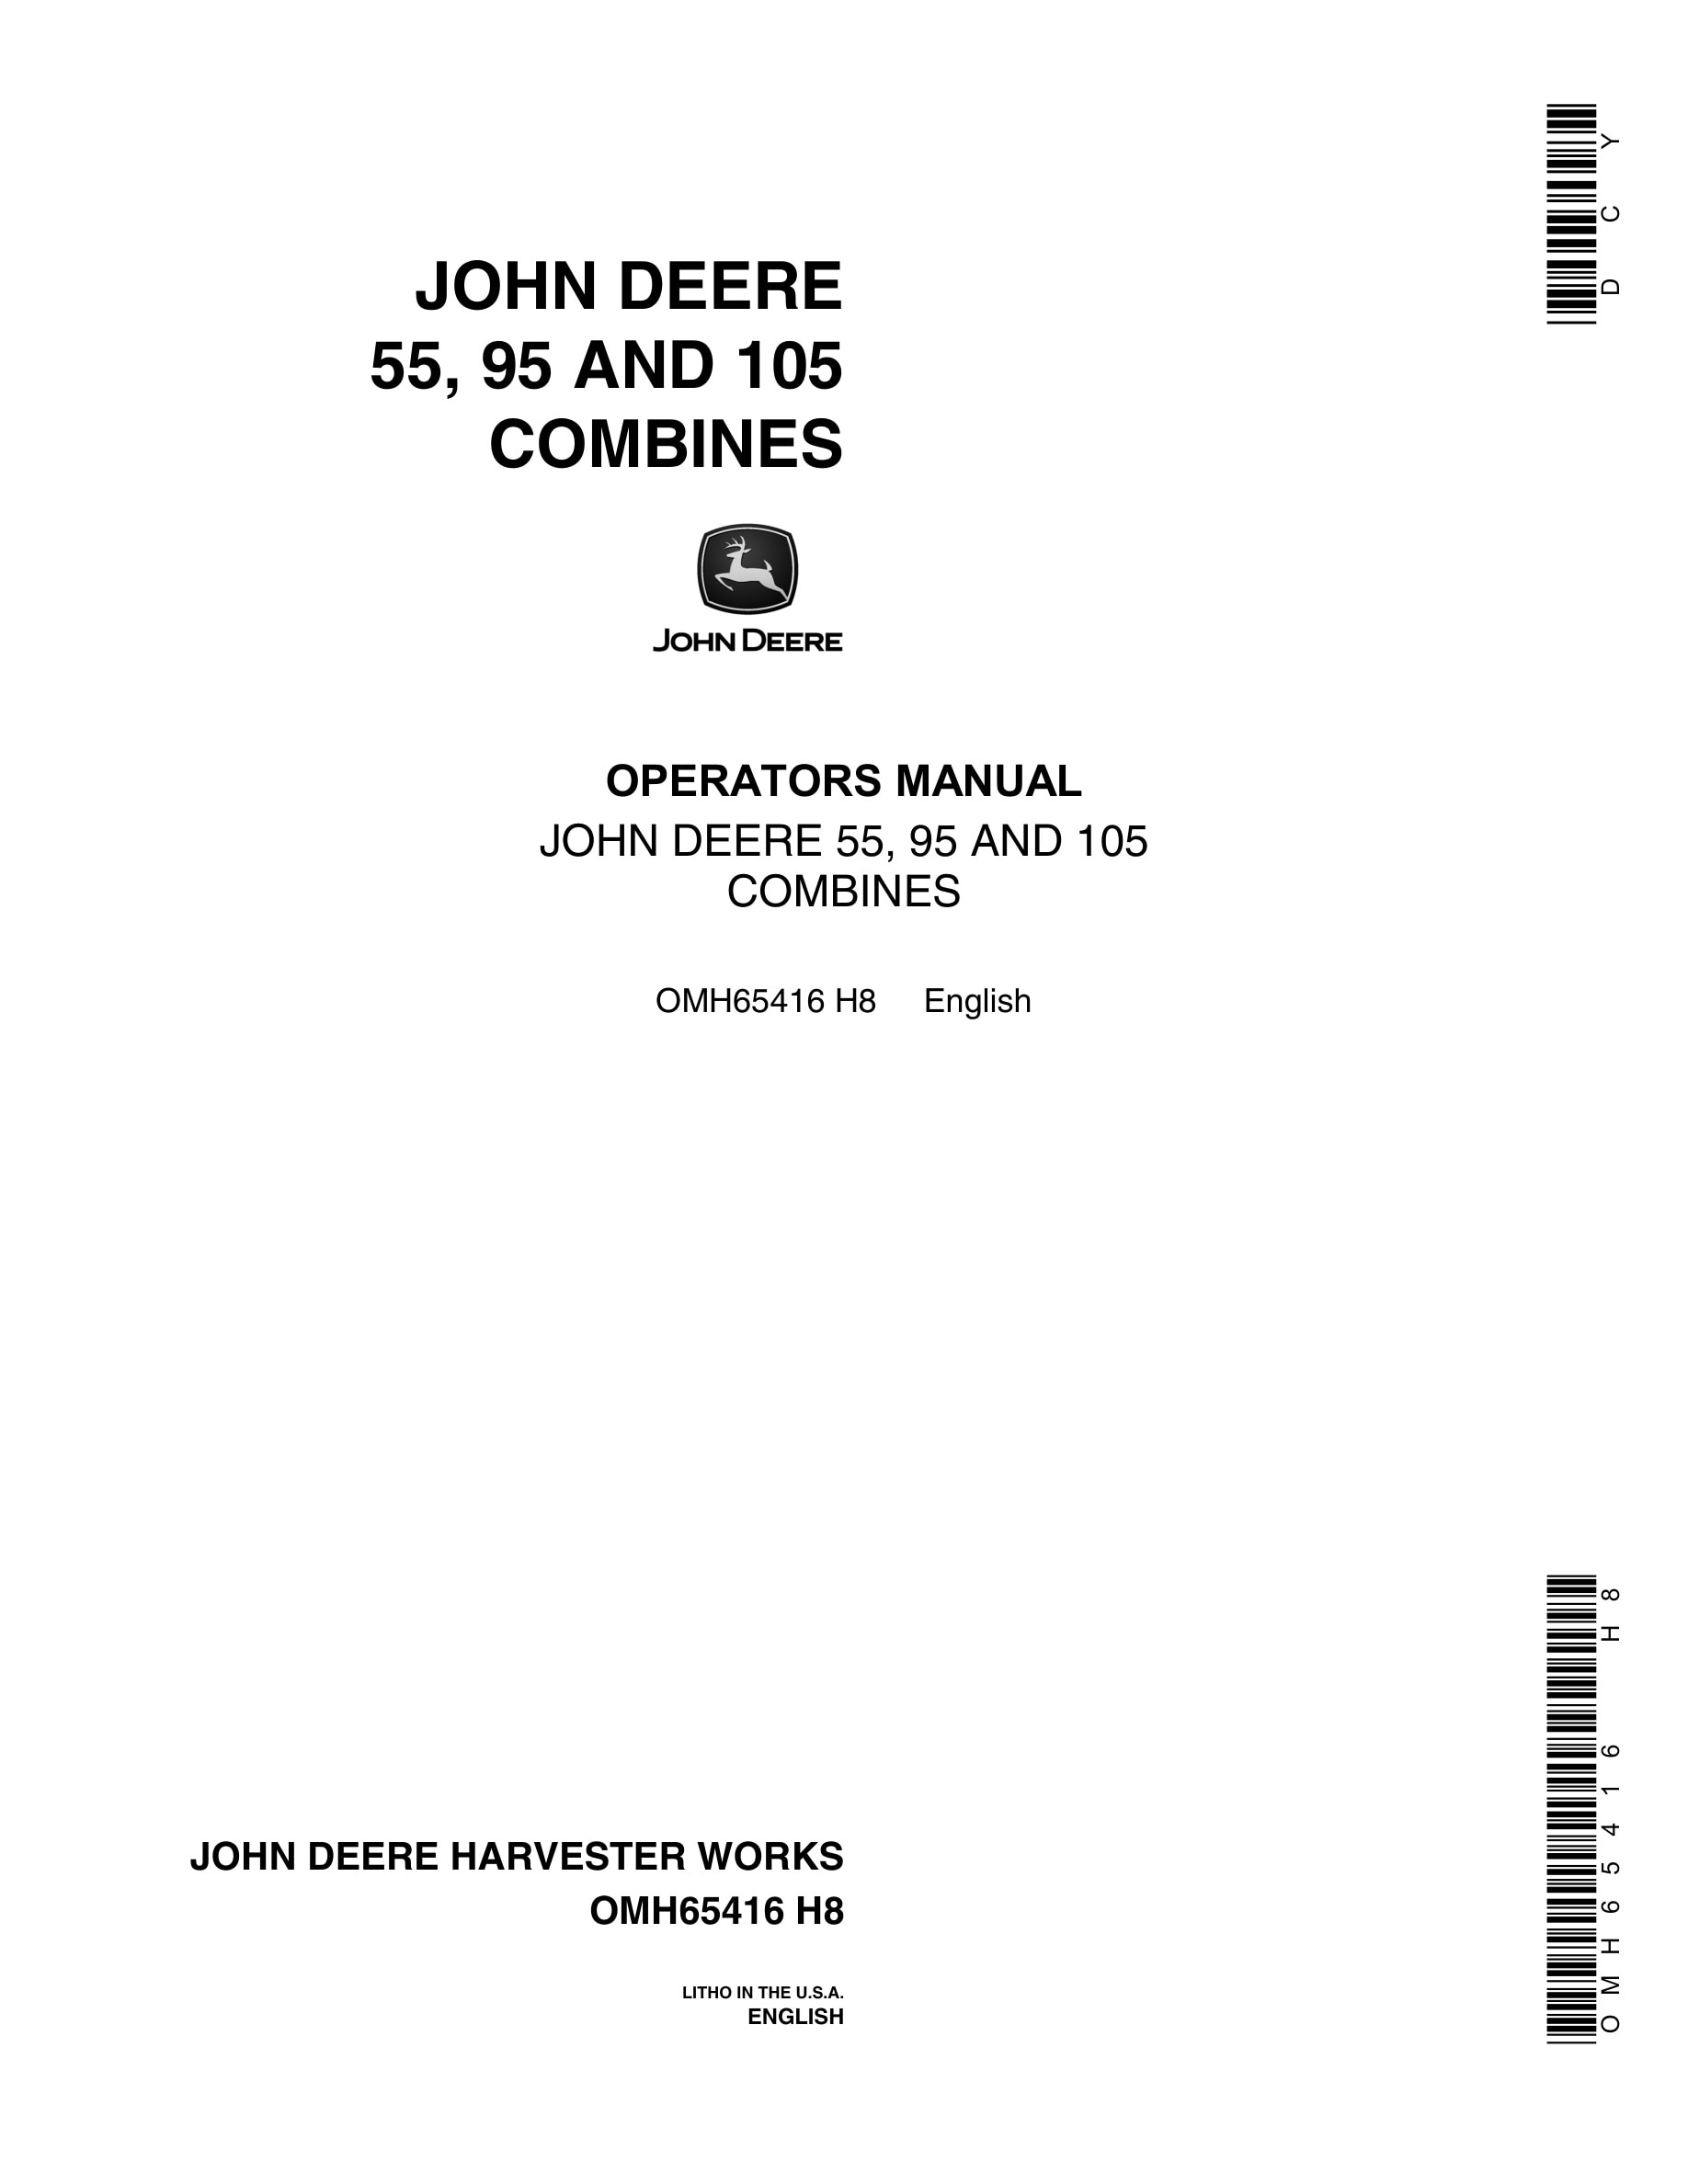 John Deere 55, 95 AND 105 Combine Operator Manual OMH65416-1